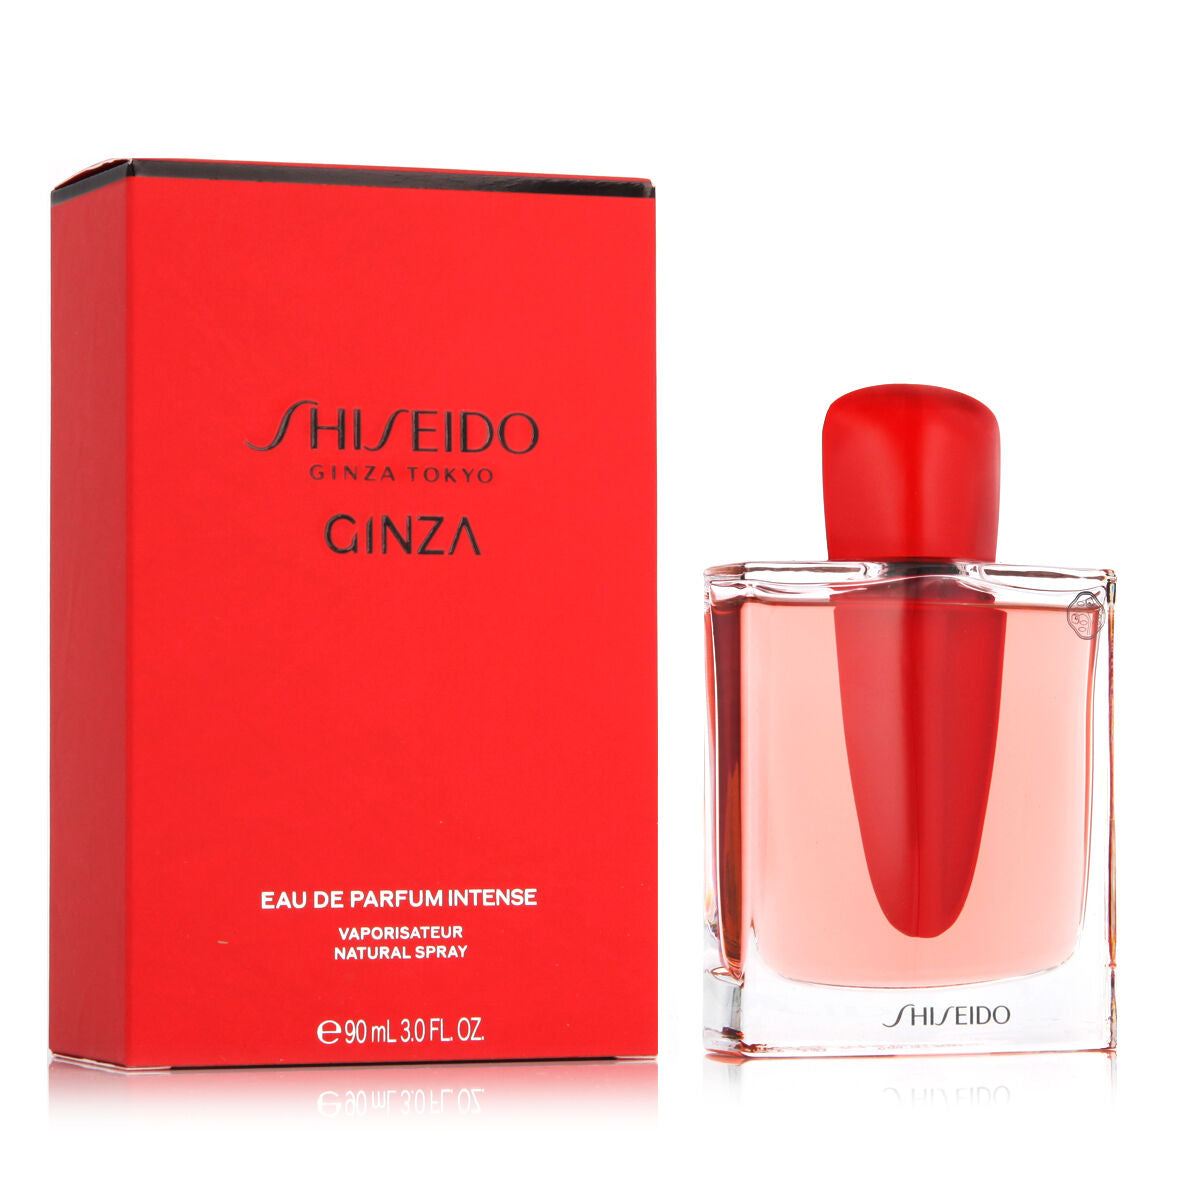 Kaufe Shiseido Ginza 90 ml - Damen bei AWK Flagship um € 102.00